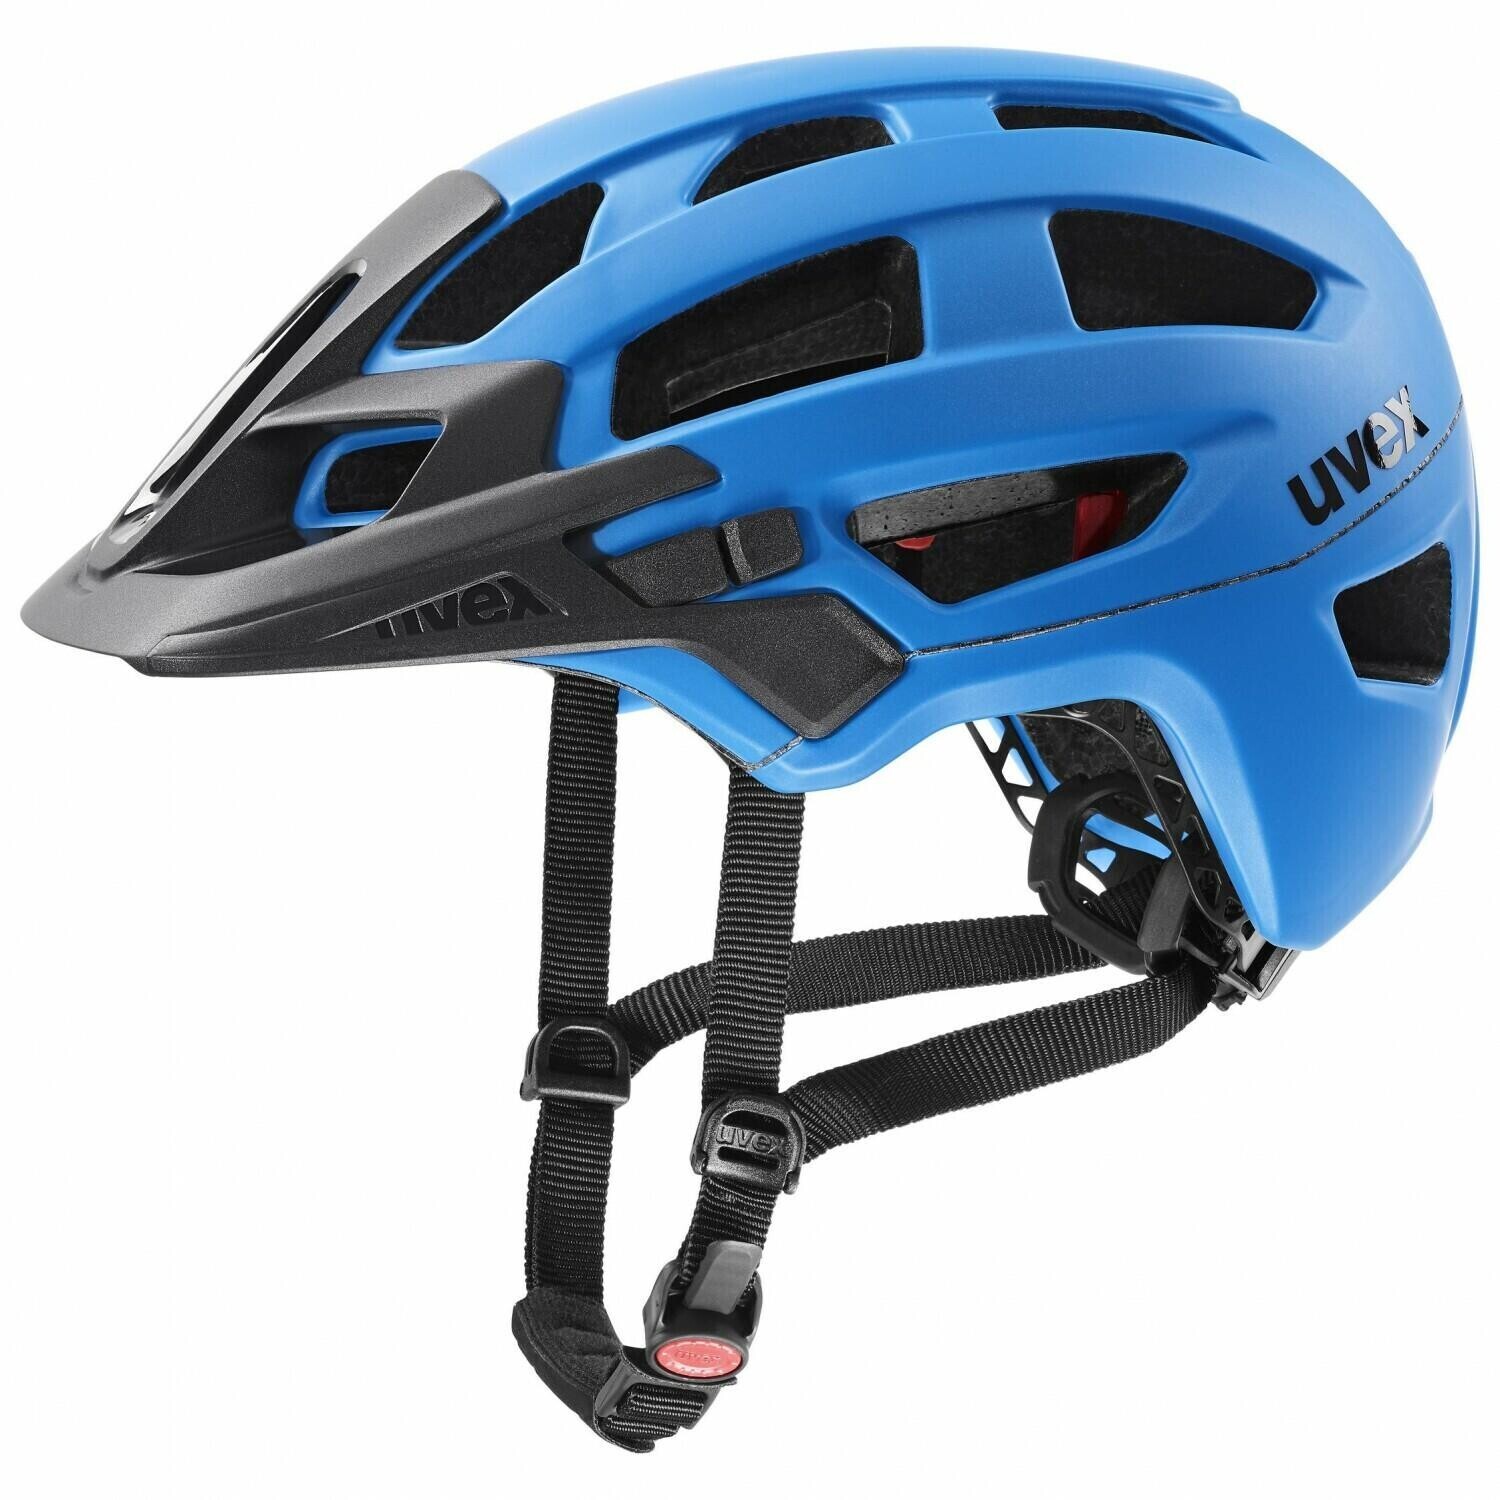 Photos - Bike Helmet UVEX Finale 2.0 teal blue mat 